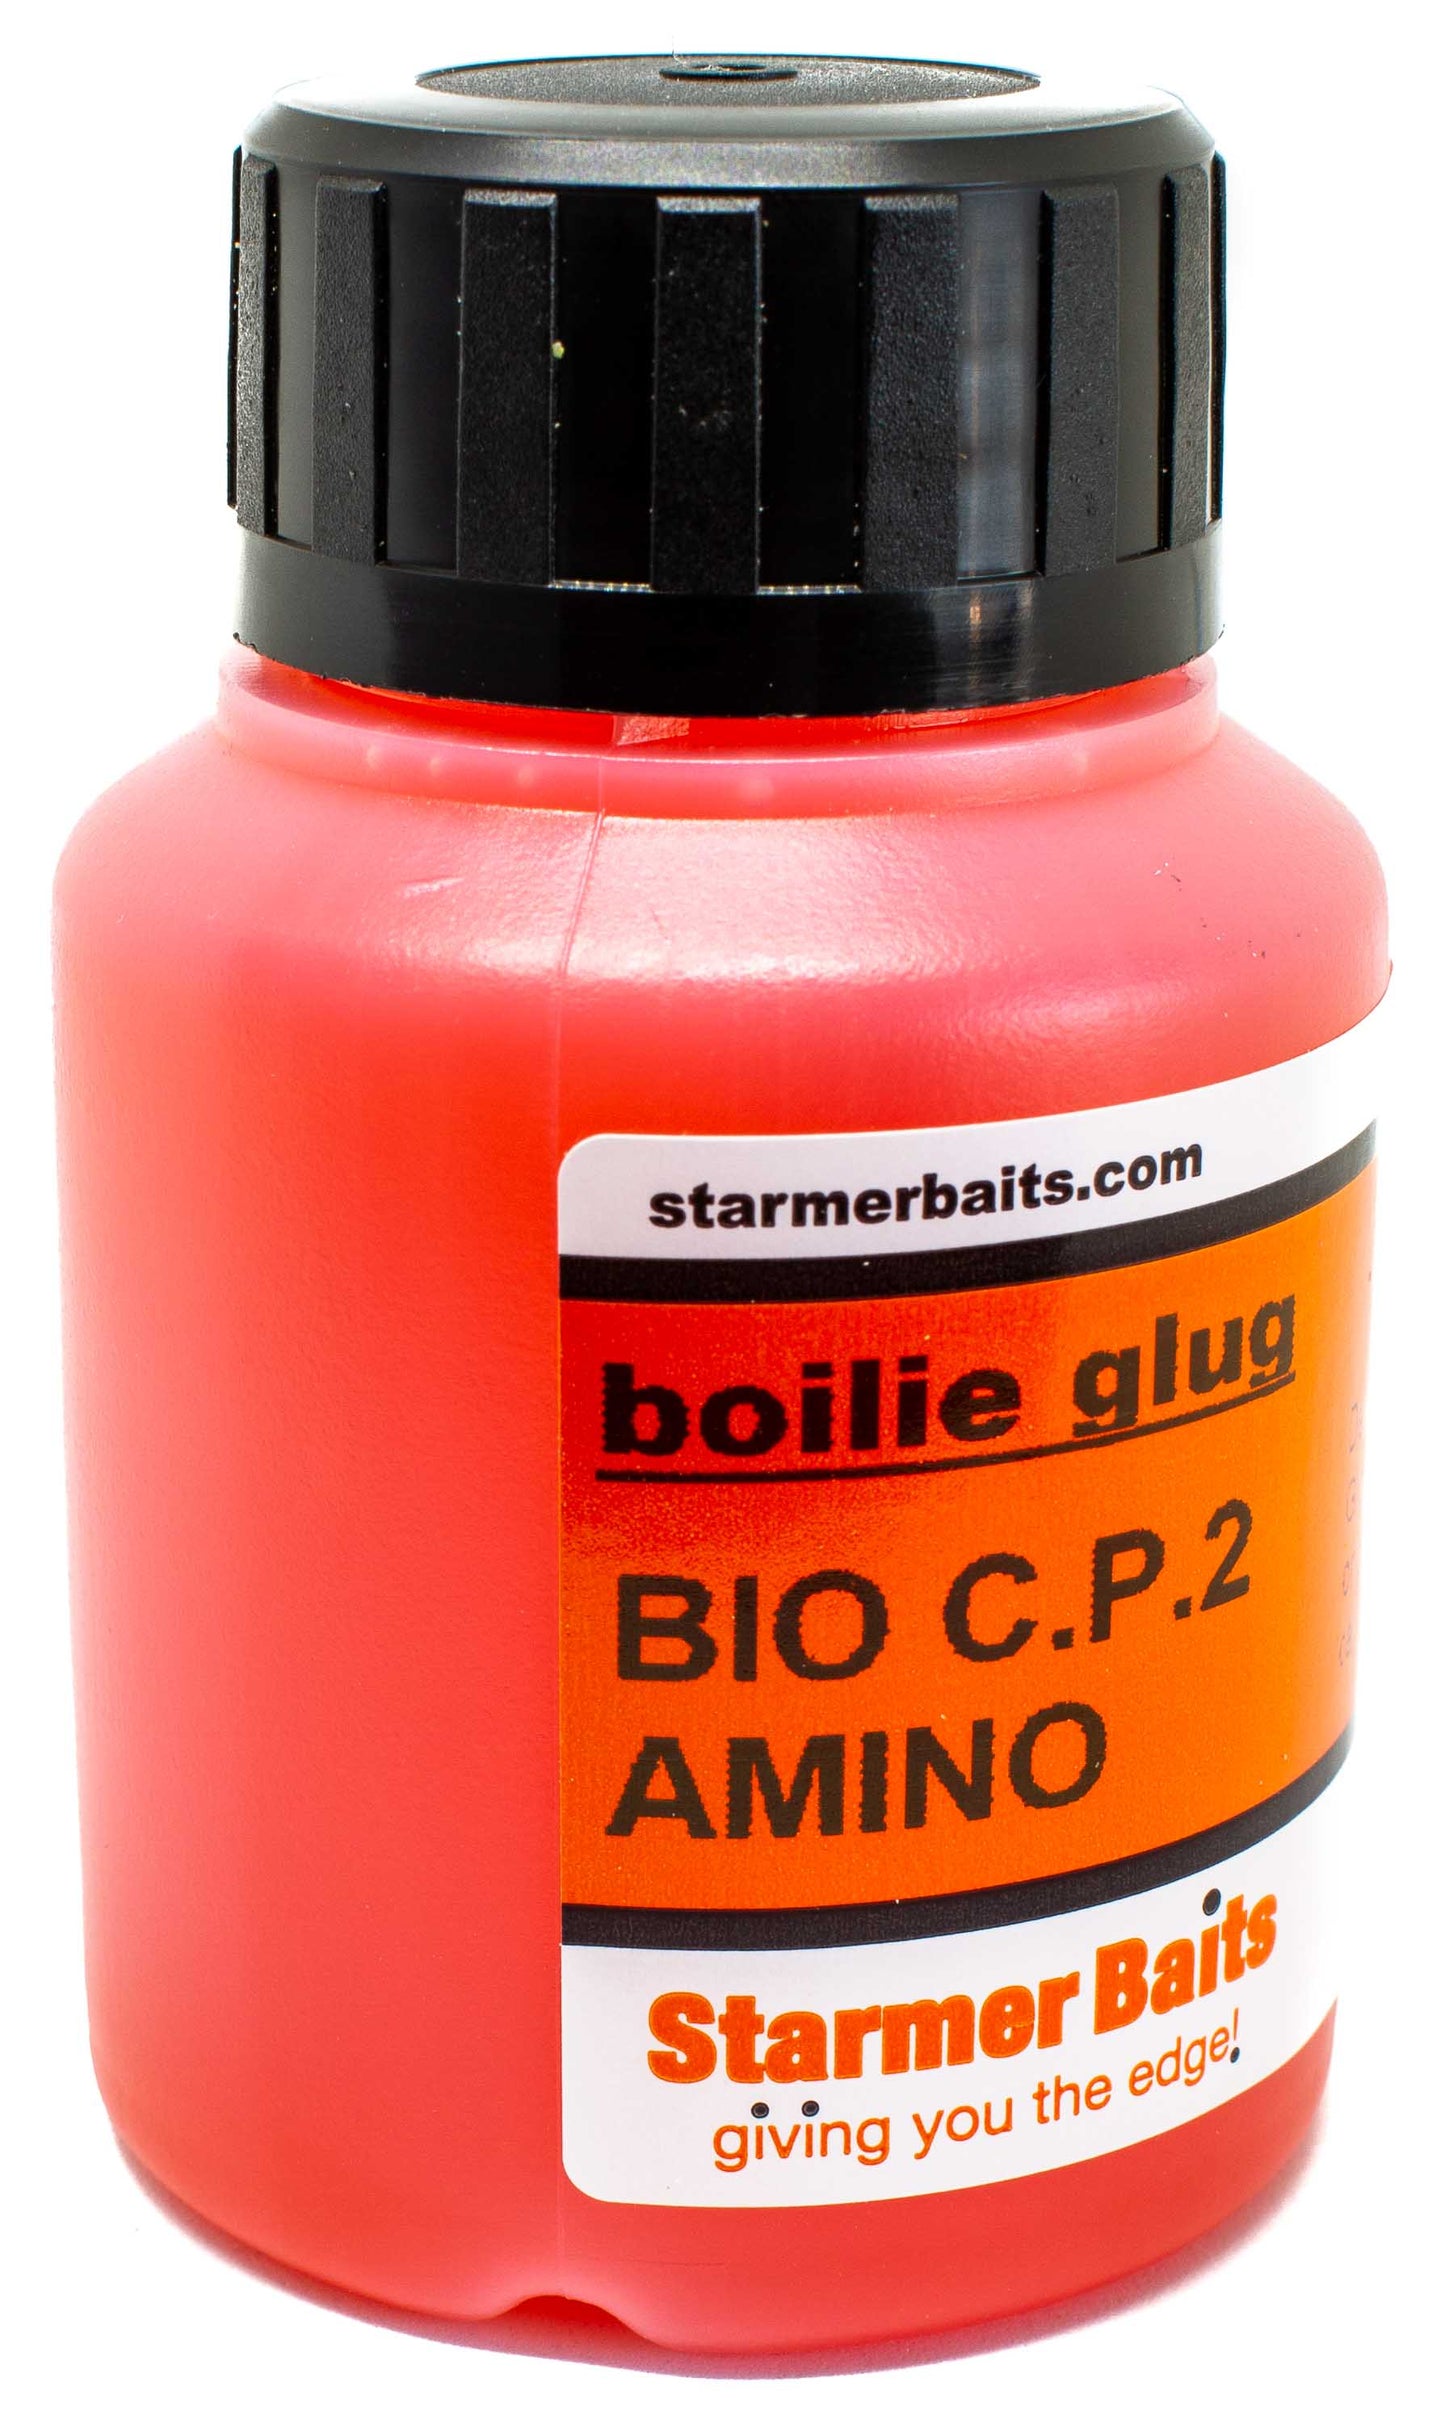 Bio c.p.2 amino boilies 15mm